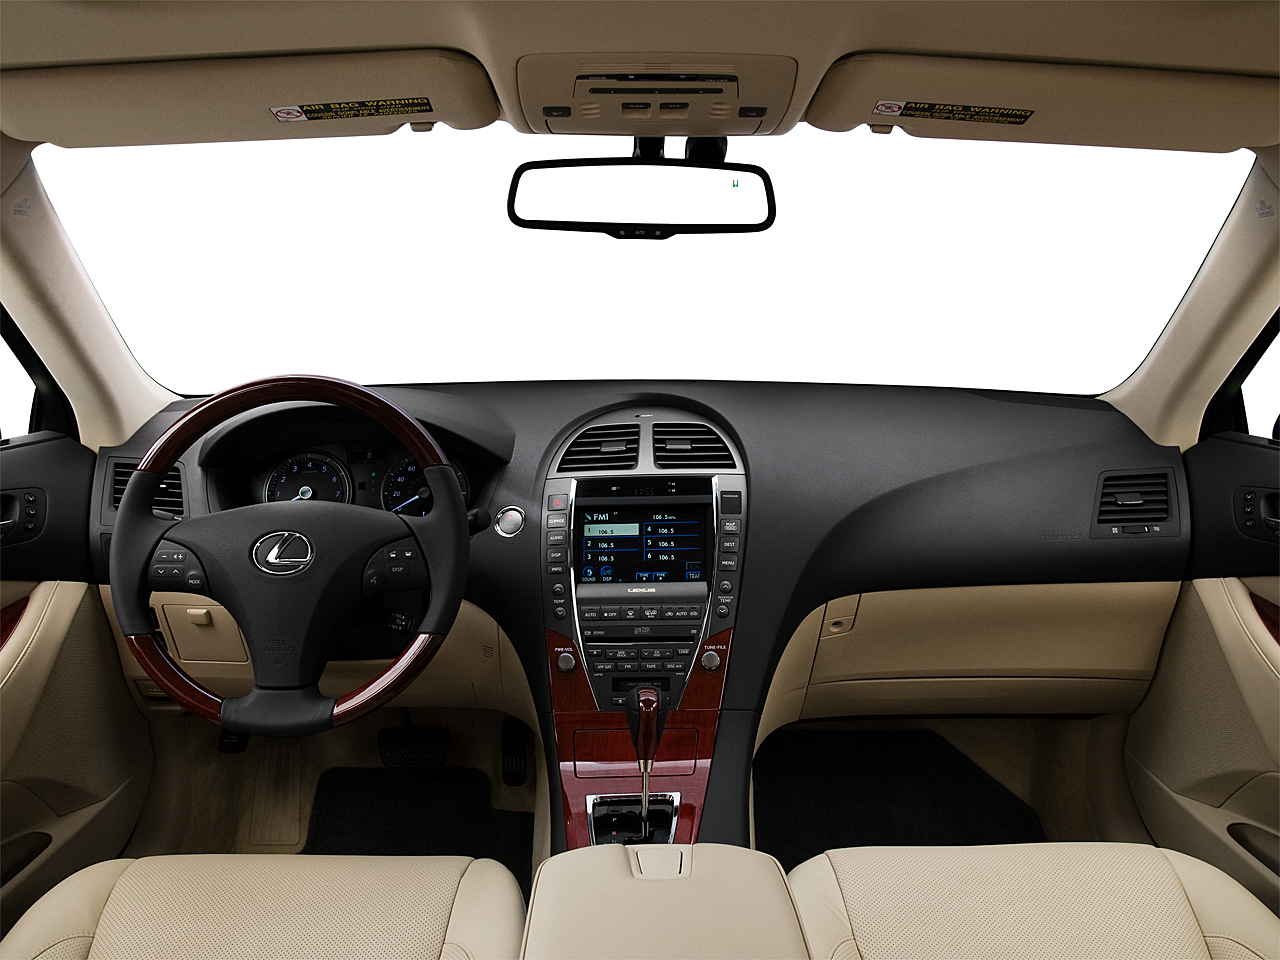 2009 Lexus ES 350 4dr Sedan - Research - GrooveCar